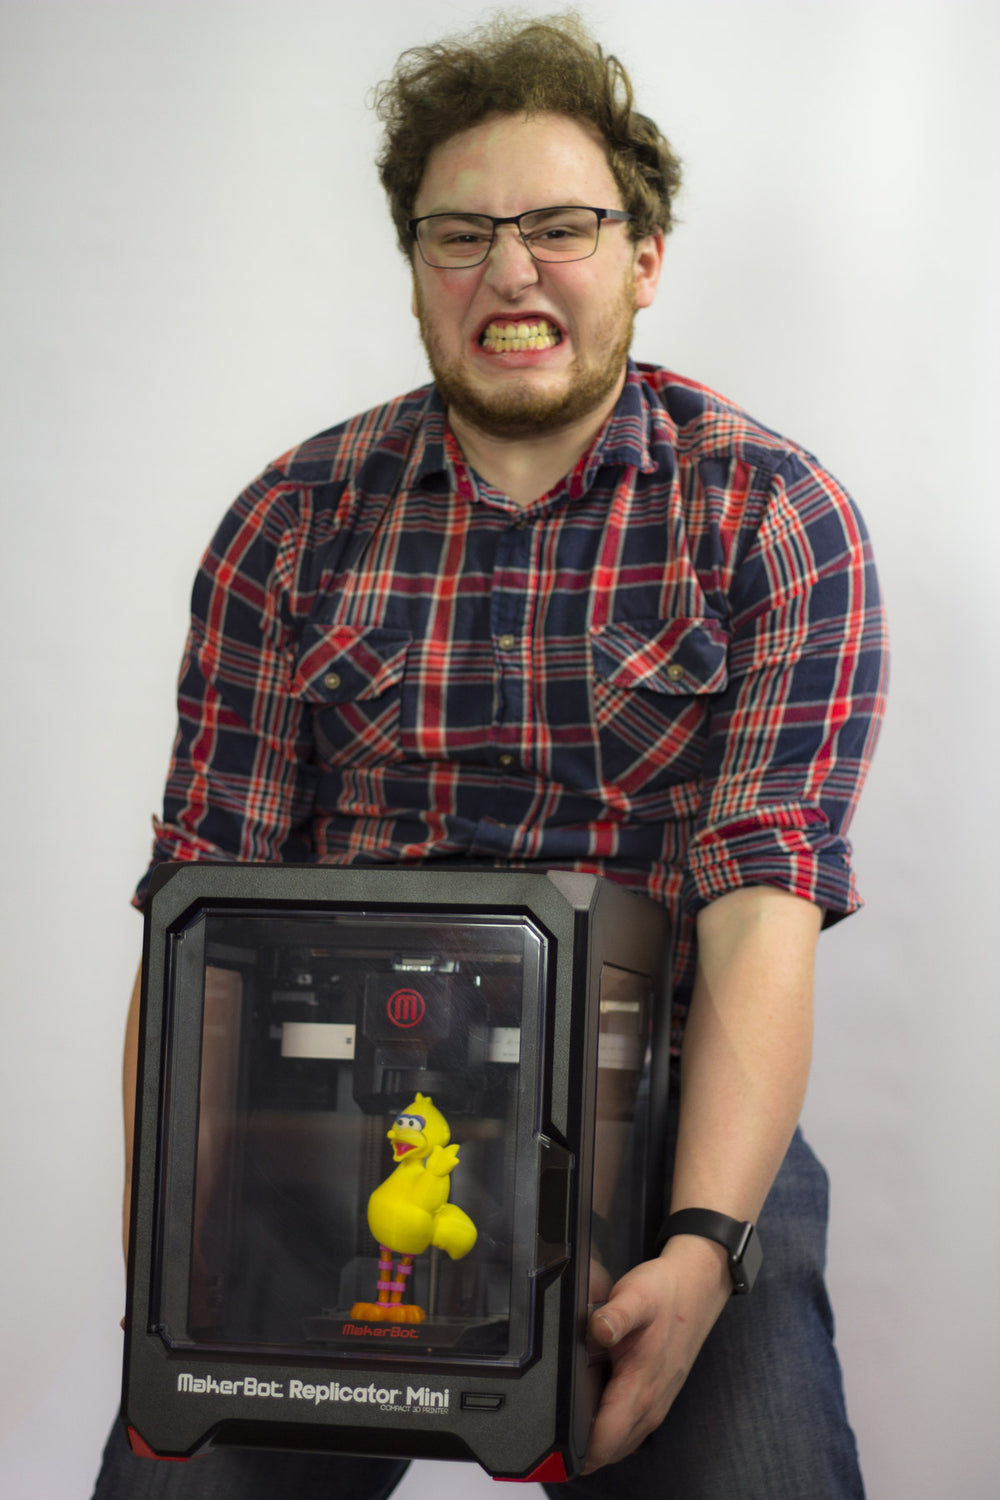 Makerbot Mini is heavy